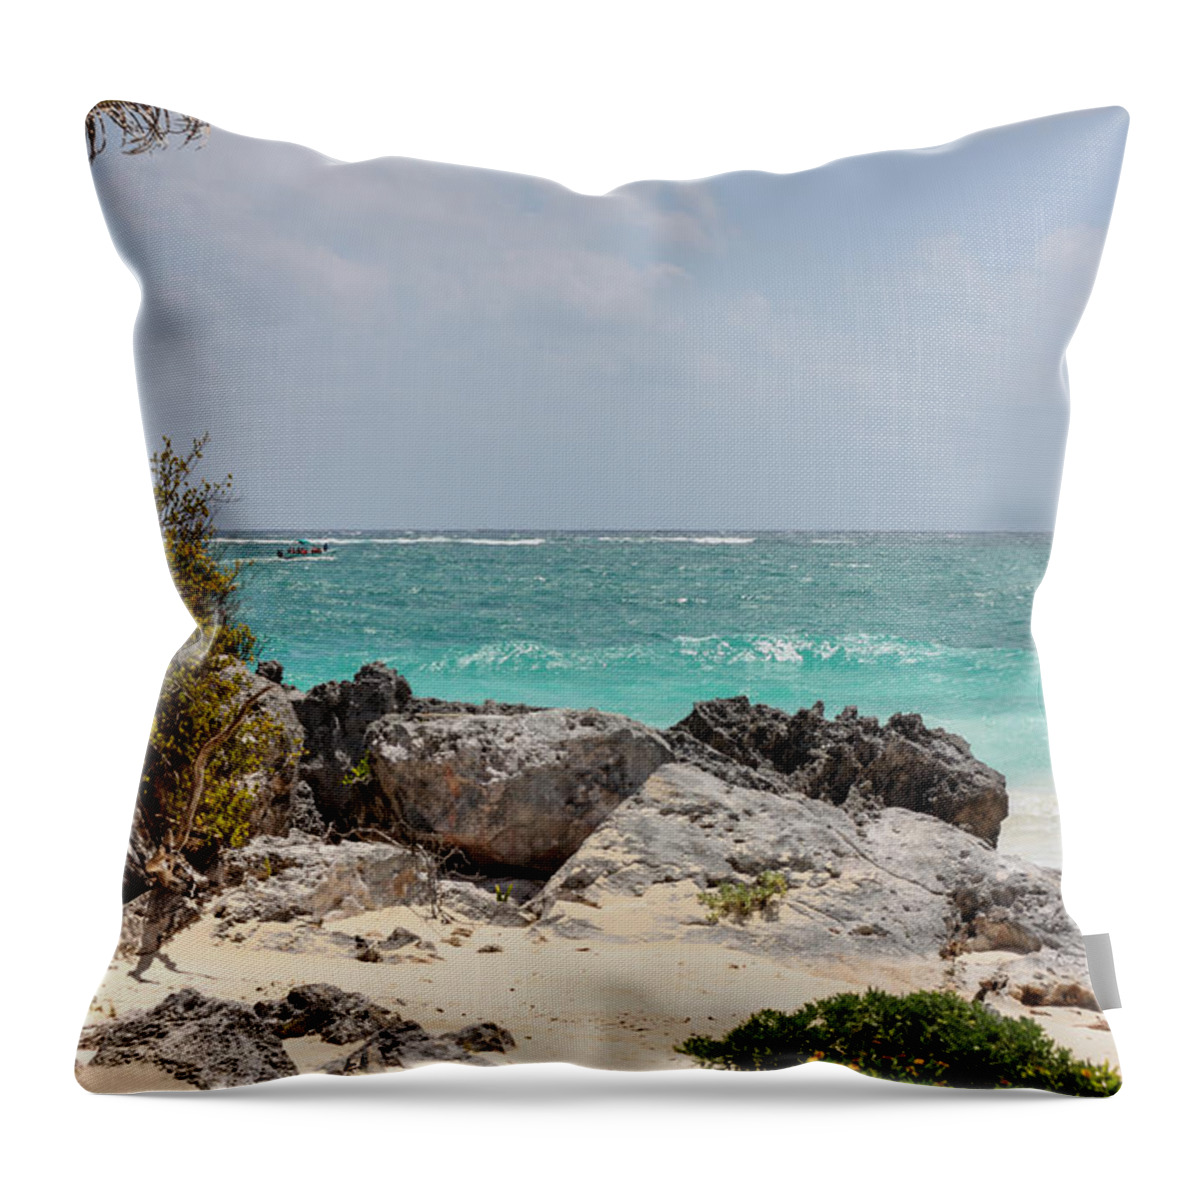 Caribbean Sea Throw Pillow featuring the photograph Caribbean Sea and Beach at Tulum by Paul Williams